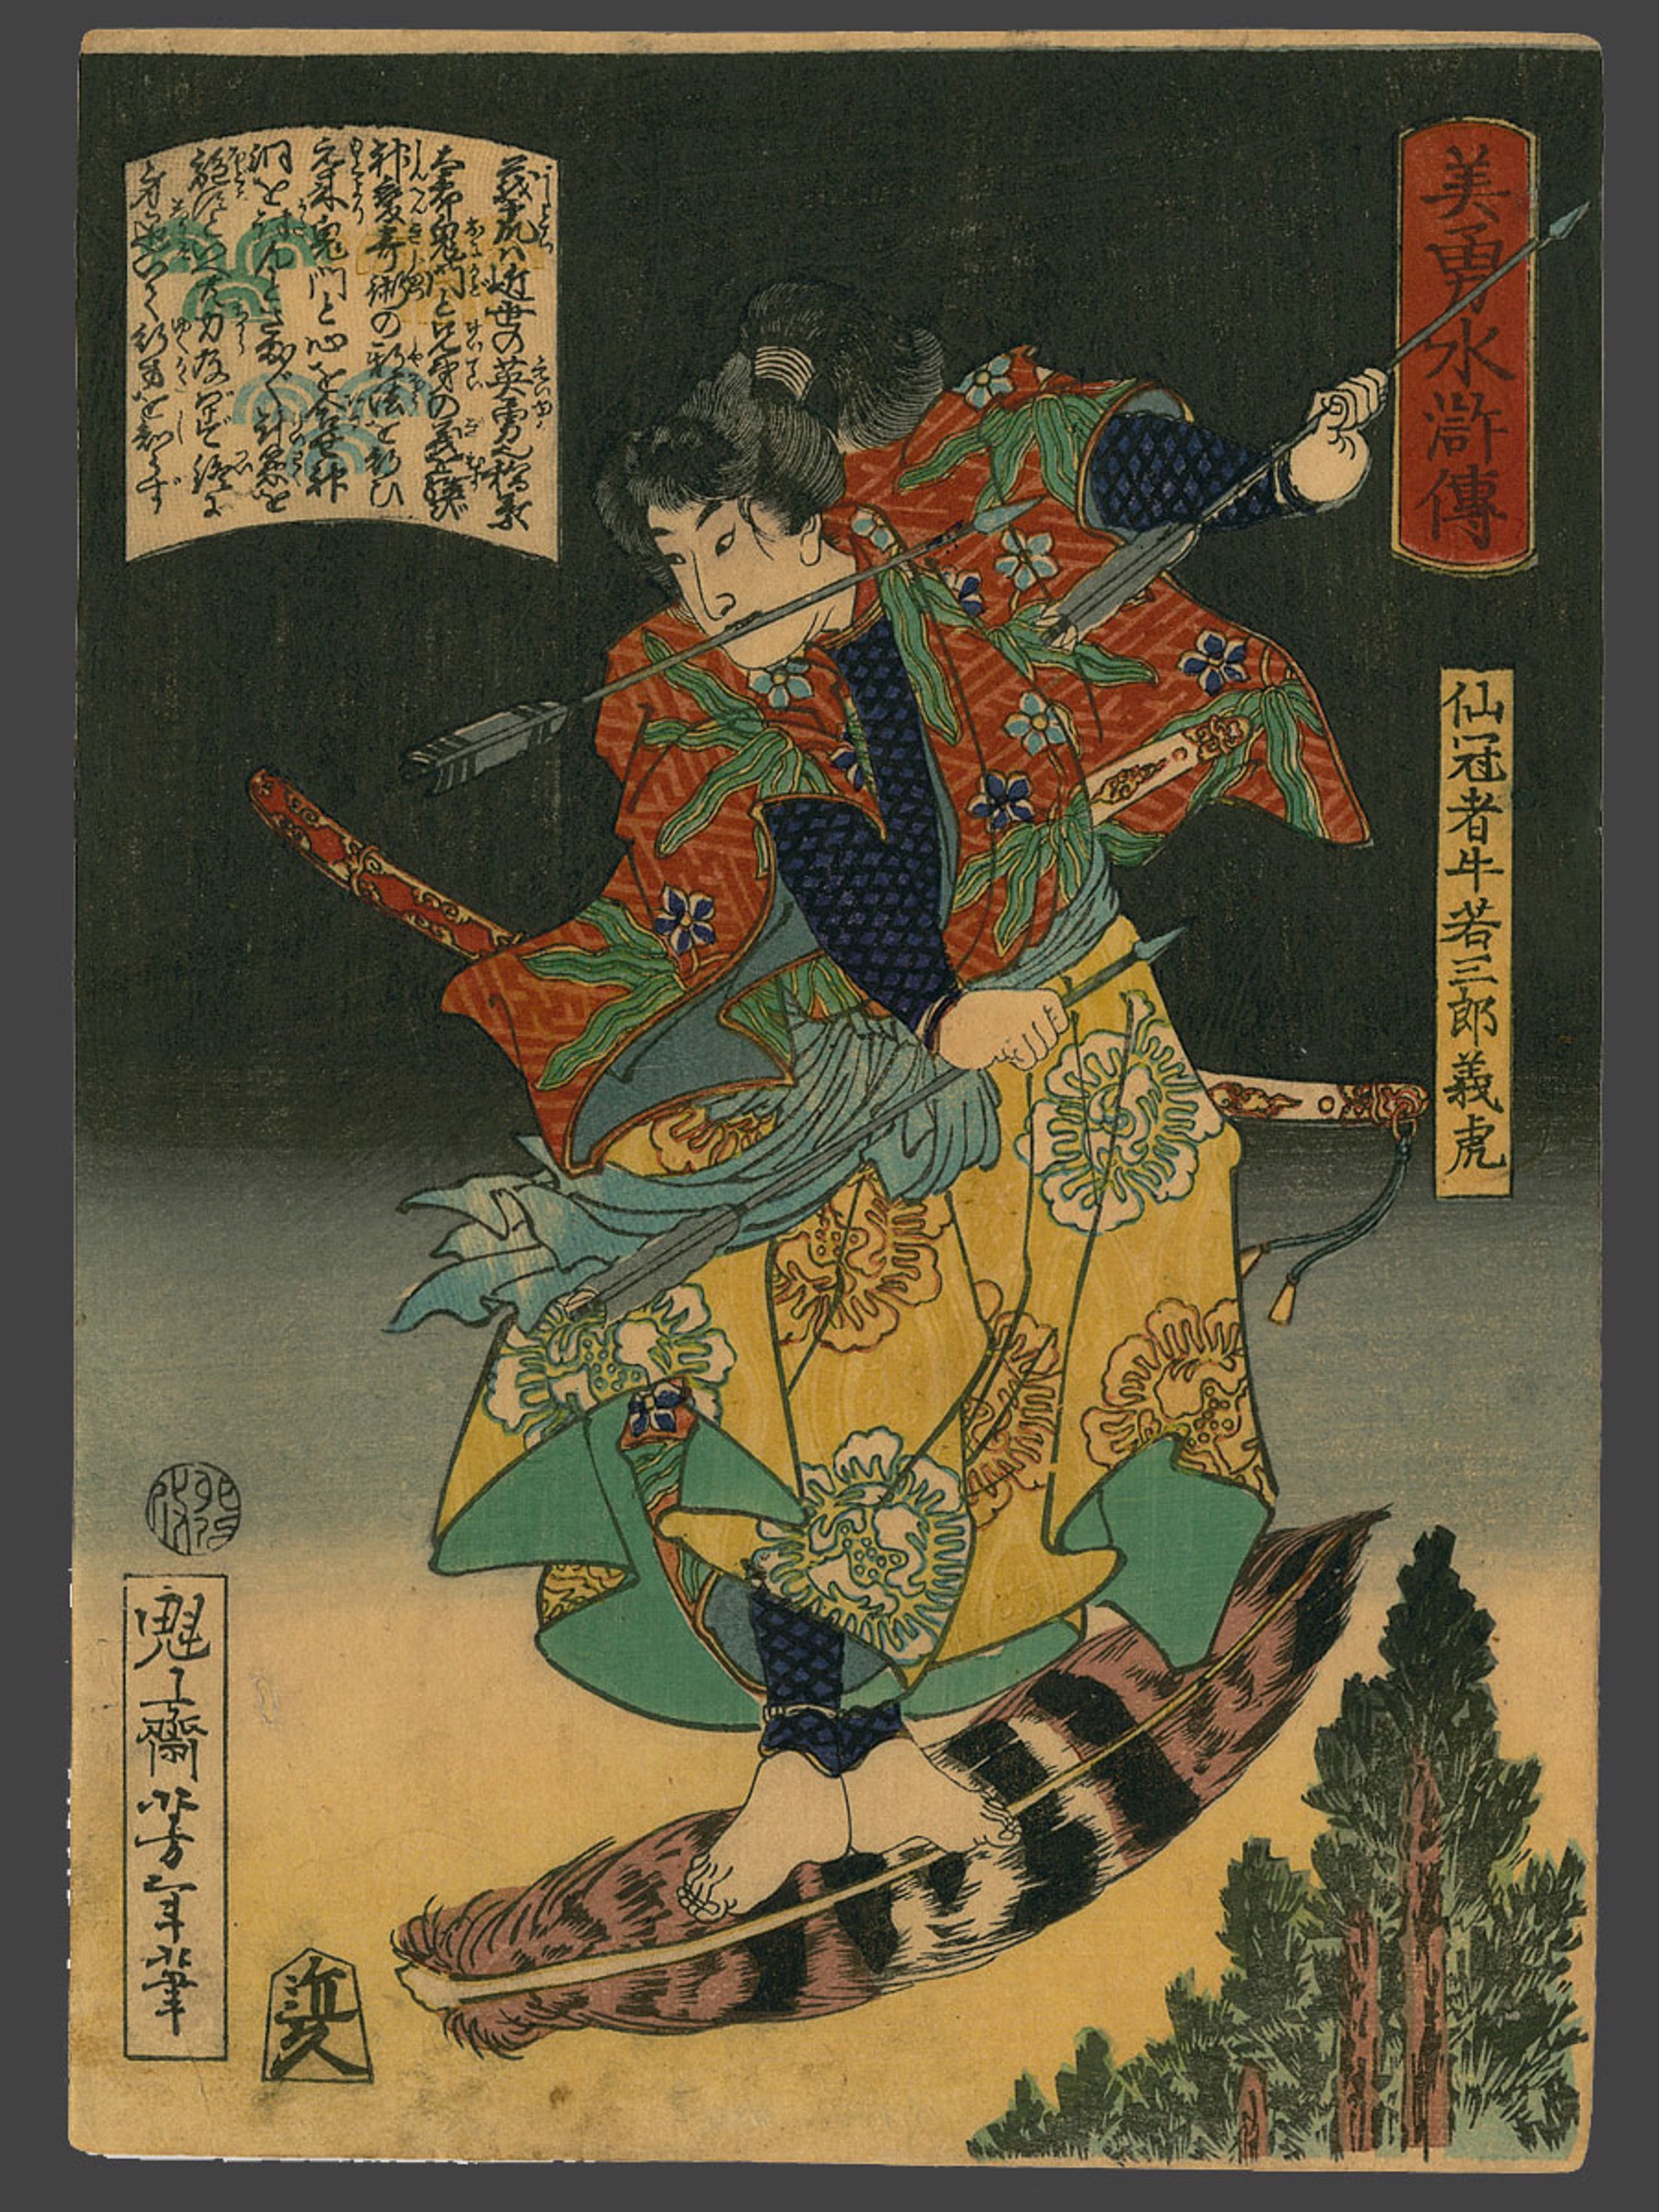 #49, Senkanja Ushiwaka Saburo Yoshitora Riding a Feather Biyu Suikoden (Beauty and Valor in Tales of the Water Margin) by Yoshitoshi